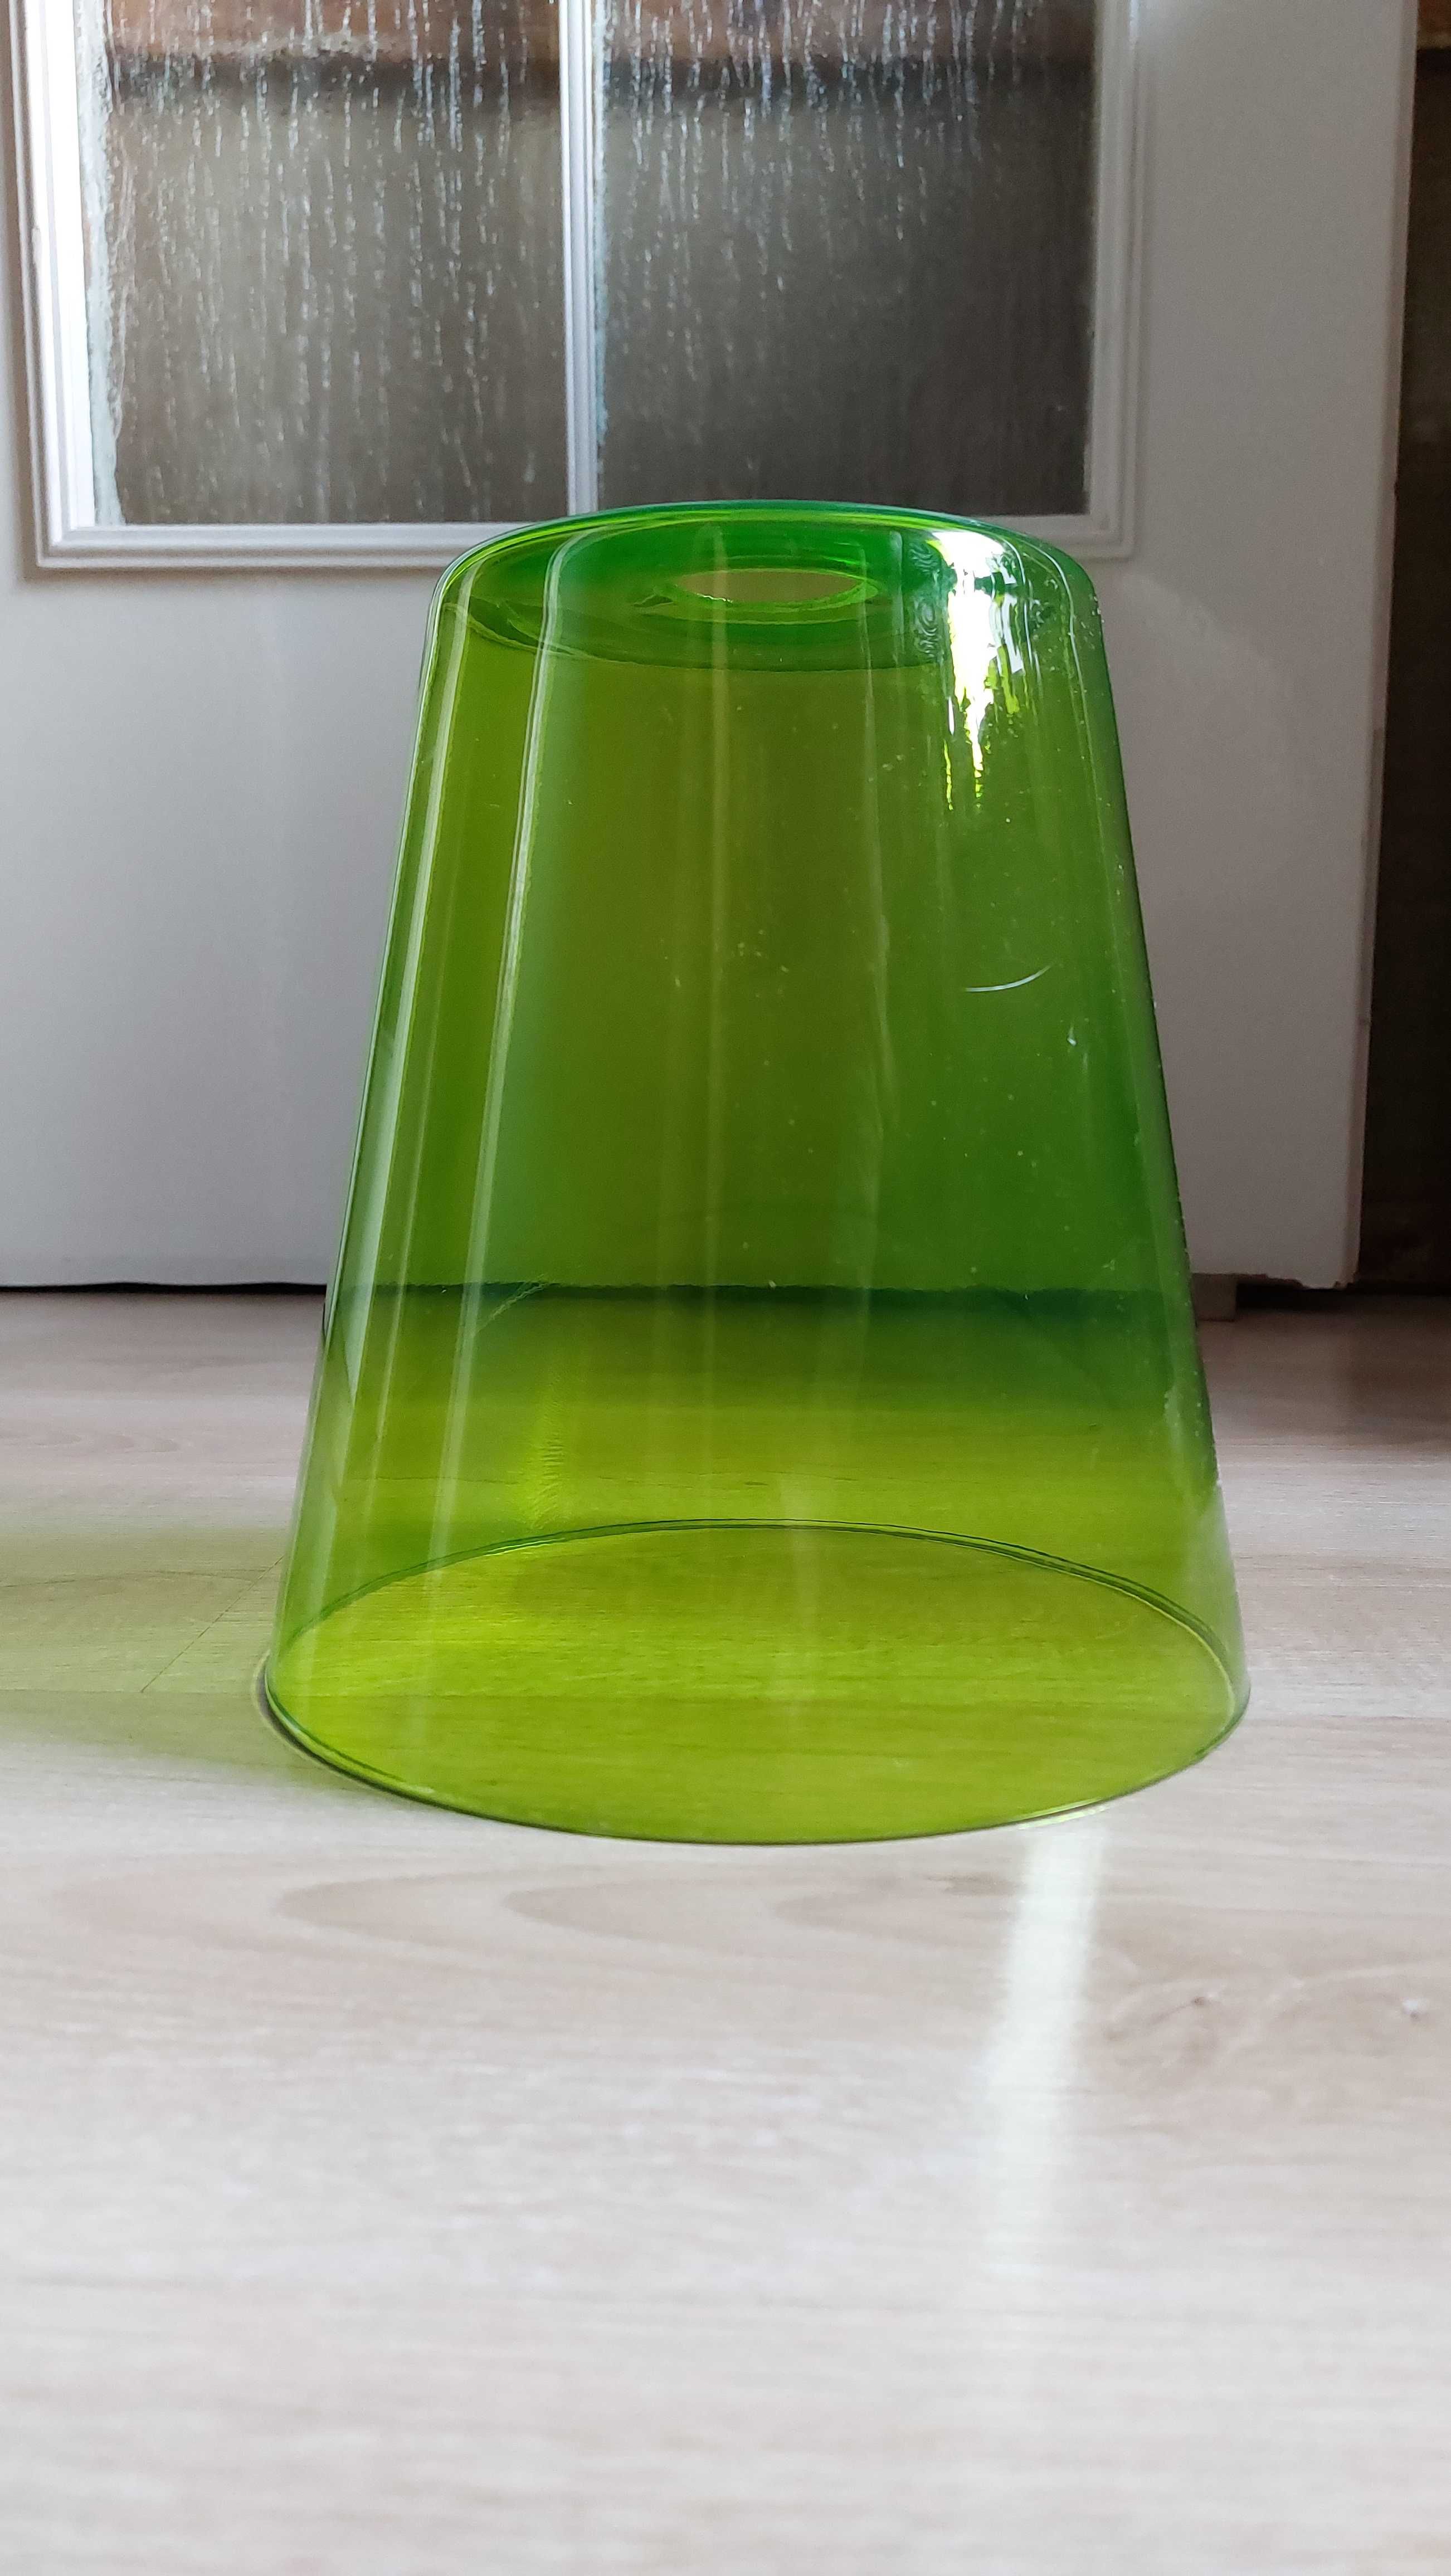 Szklana, zielona lampa sufitowa